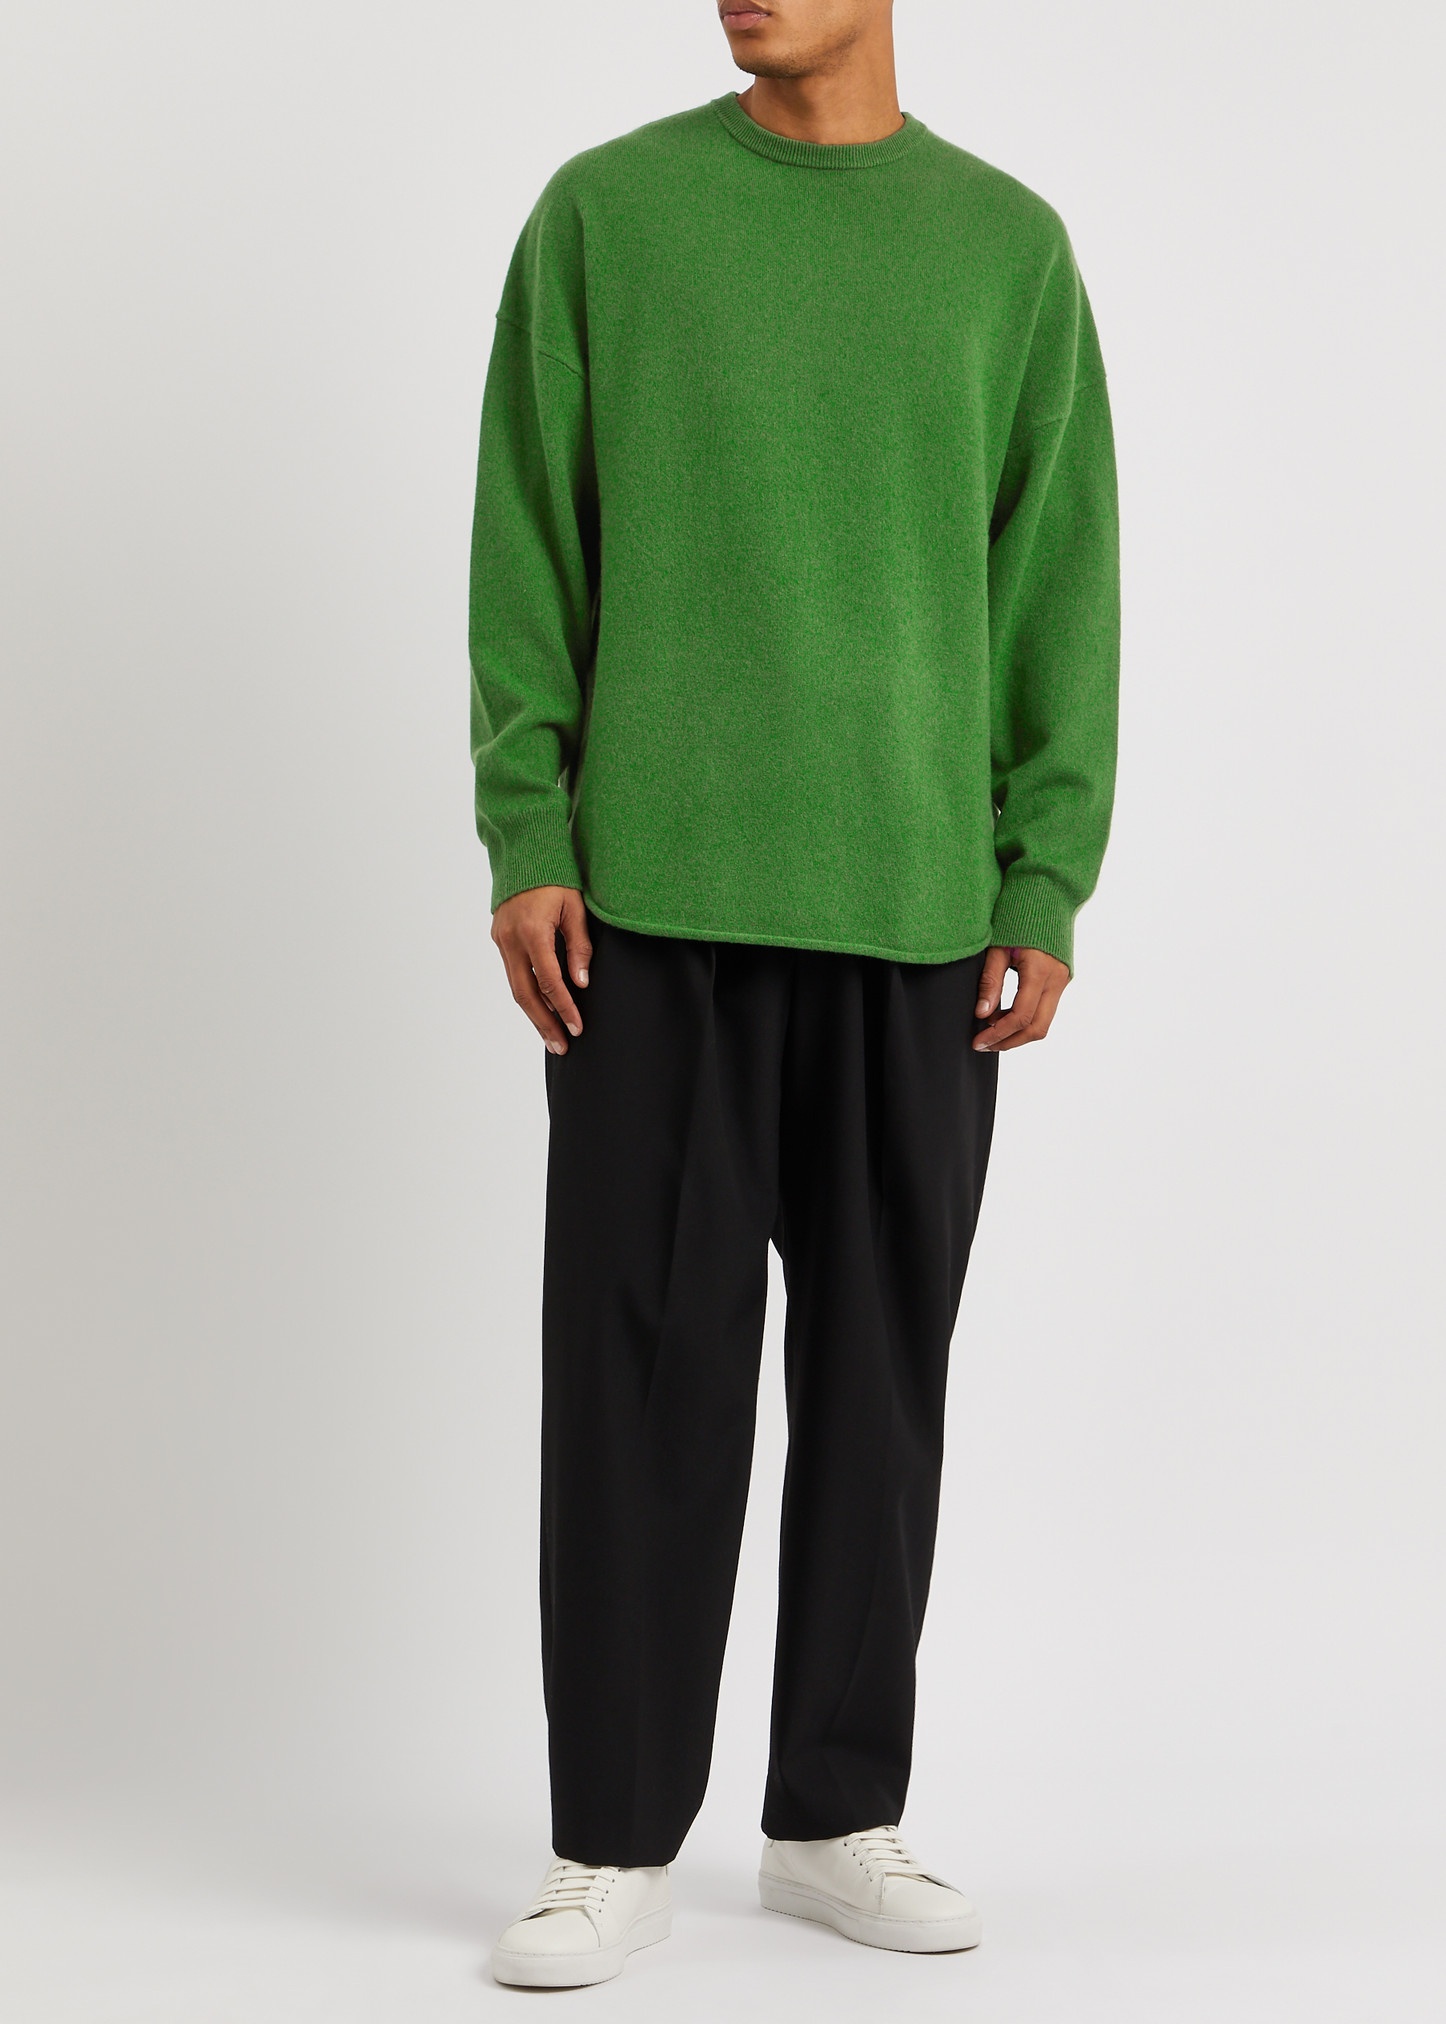 extreme cashmere No 316 cashmere jumper - Green